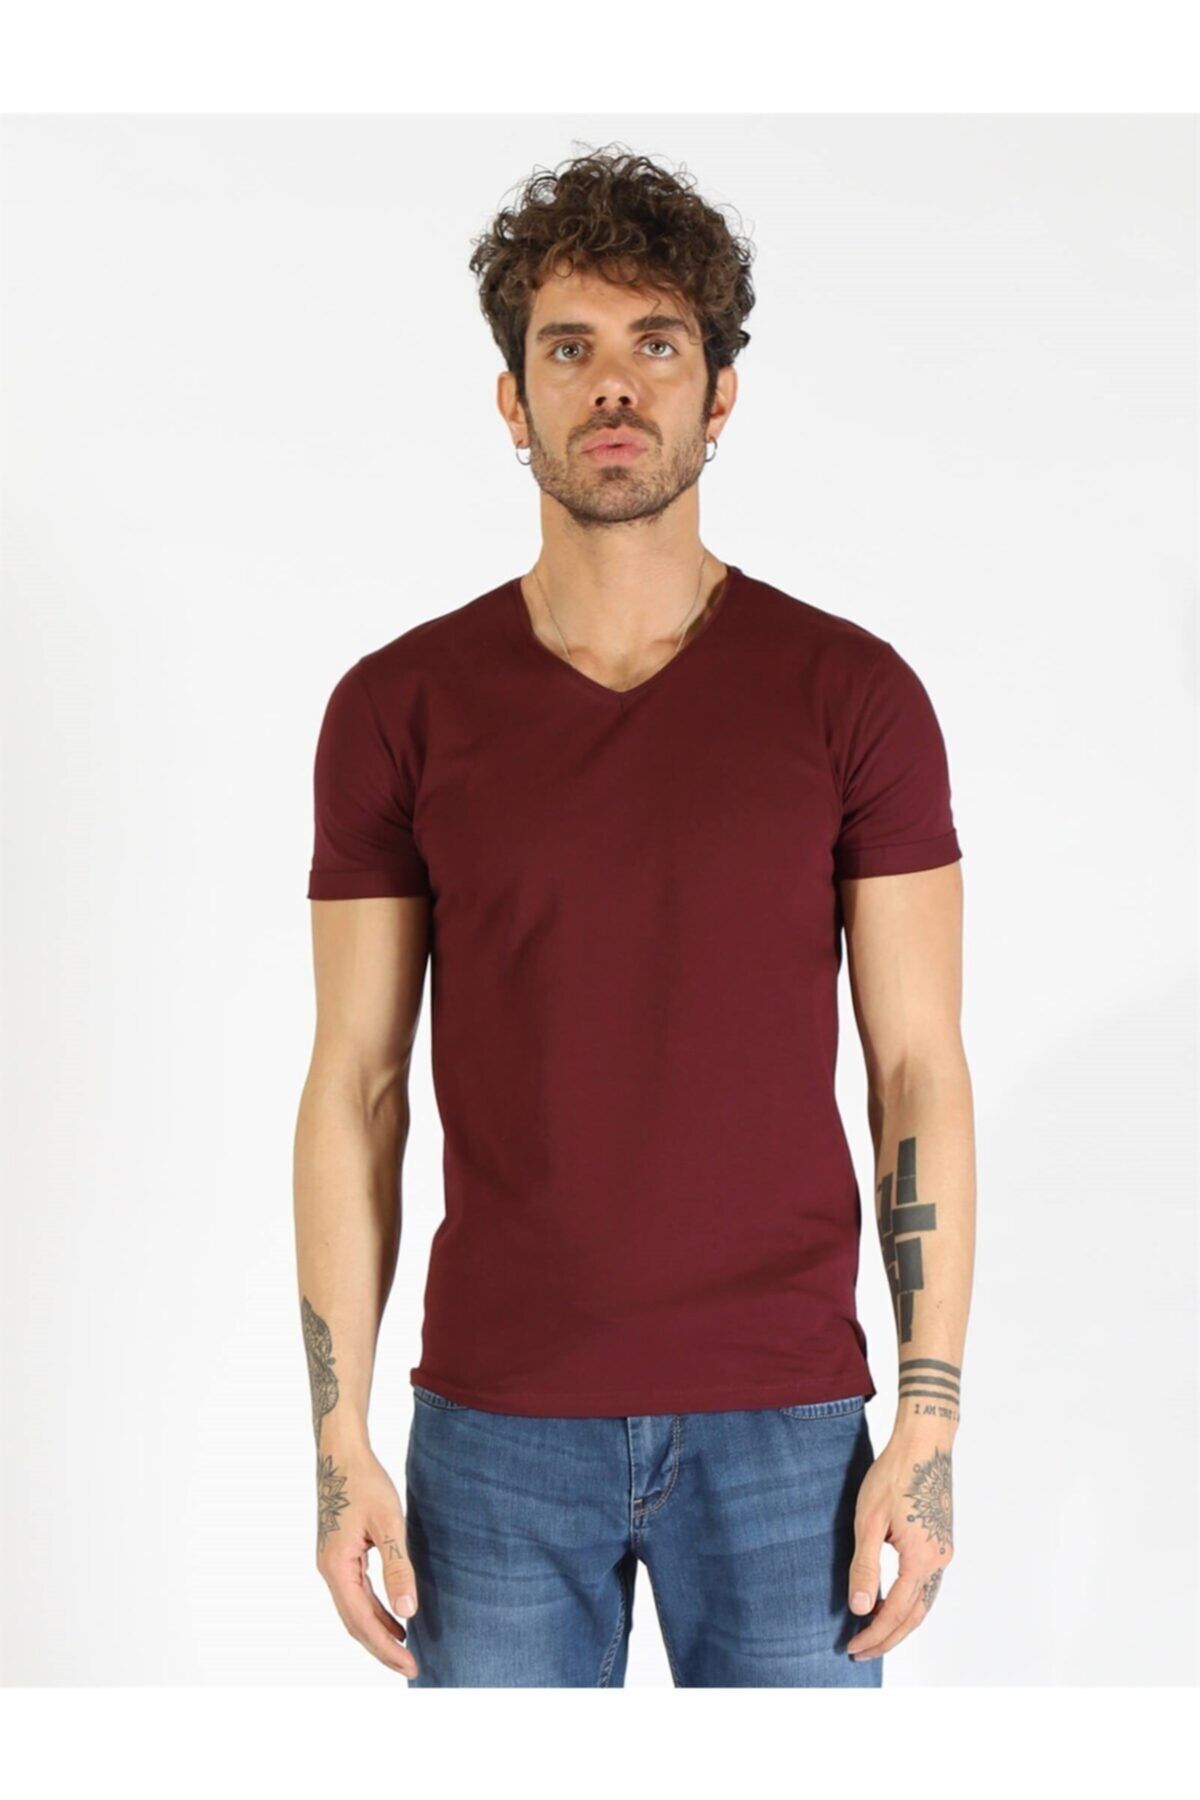 Twister Jeans Erkek Bordo T-shirt 1827 (t)